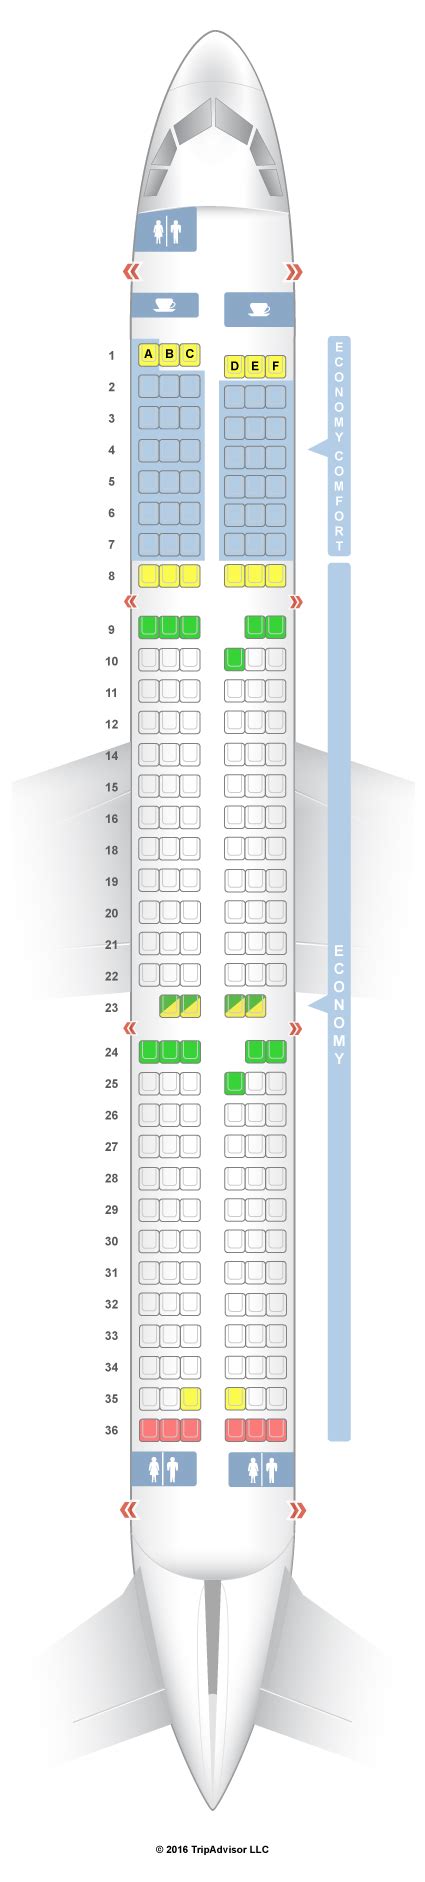 Seatguru Seat Map Alitalia Airbus A321 321 Layout 1